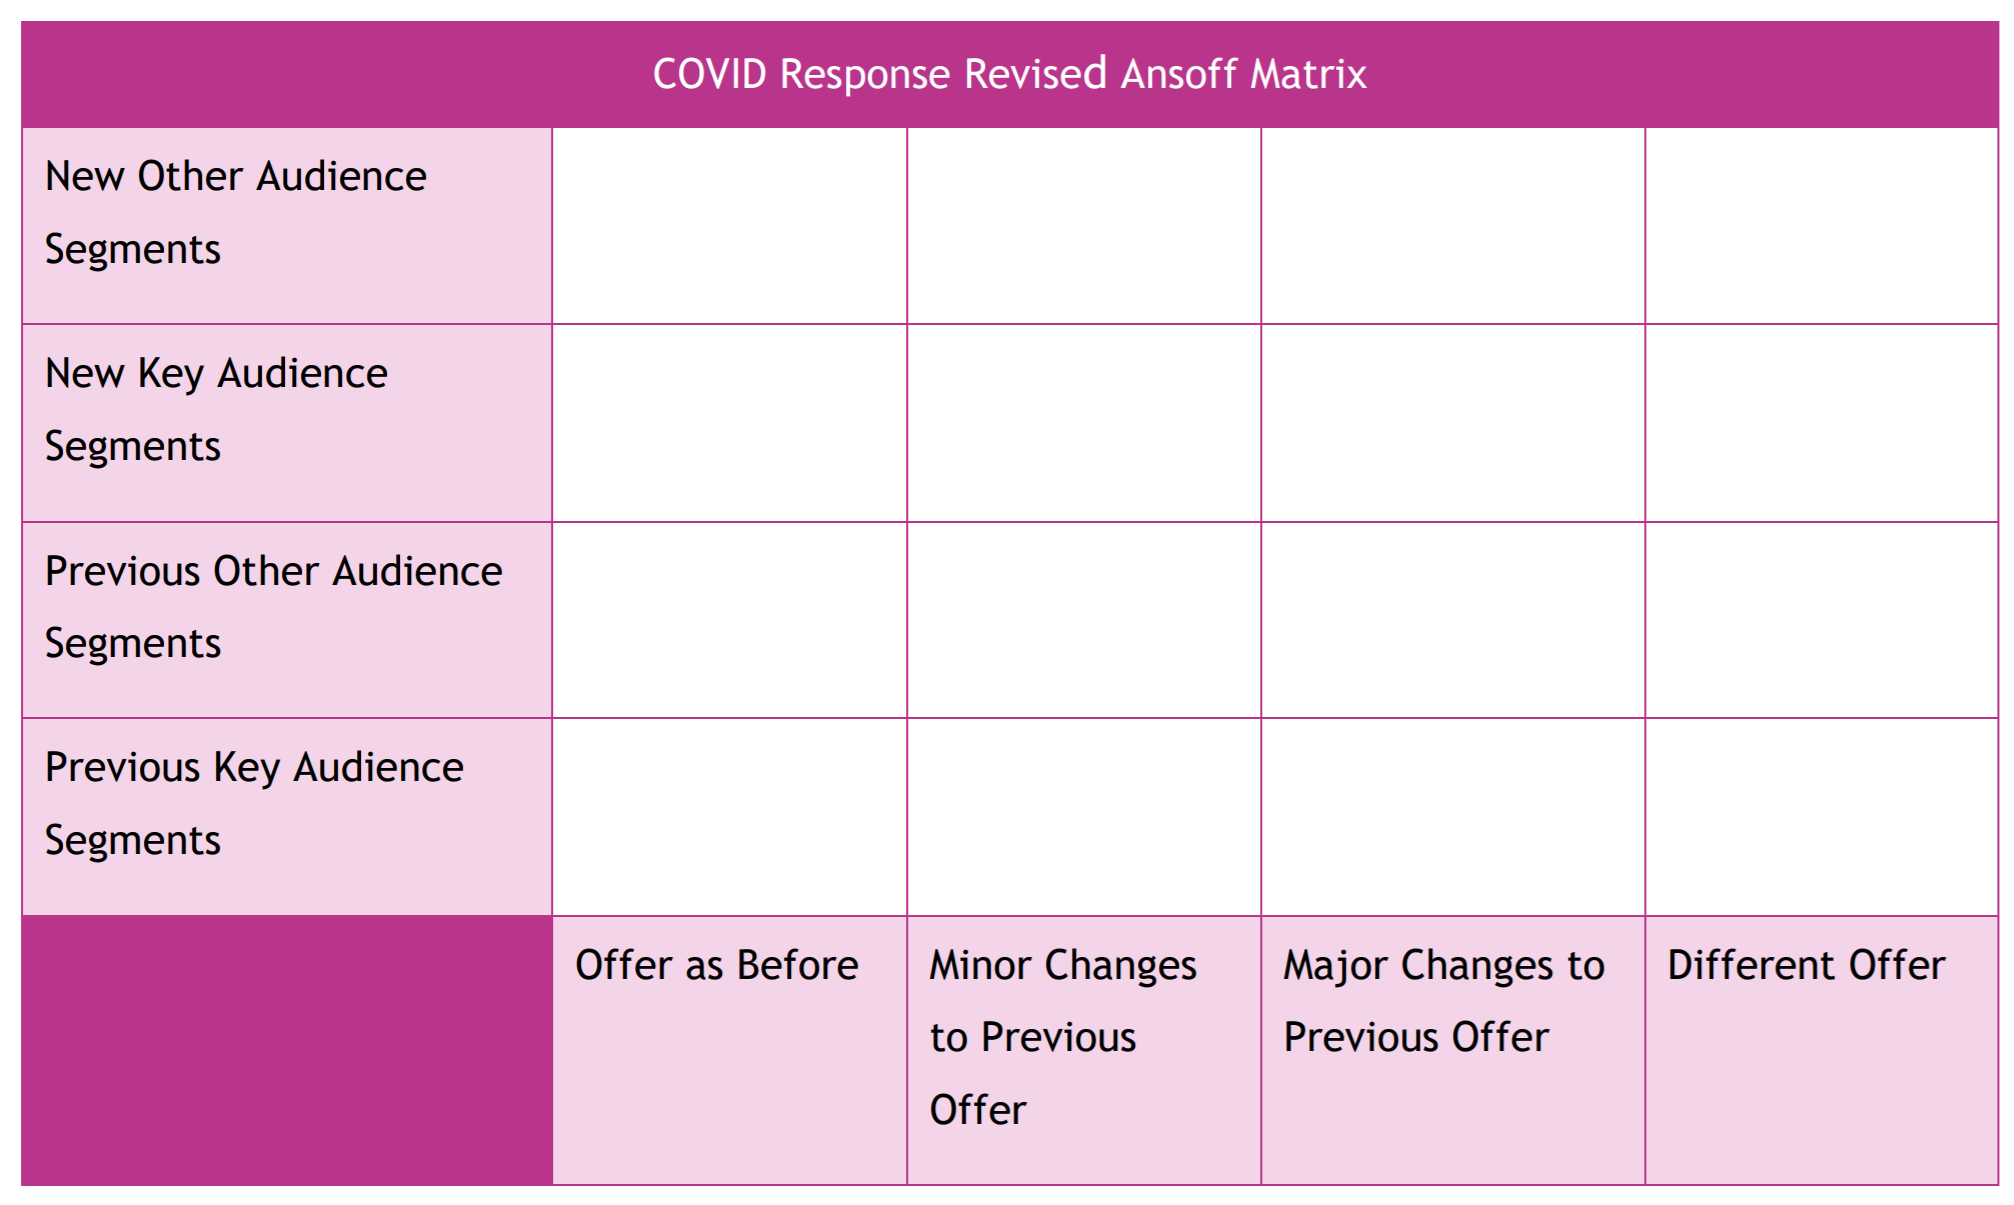 Covid REsponse Ansoff Matrix.png